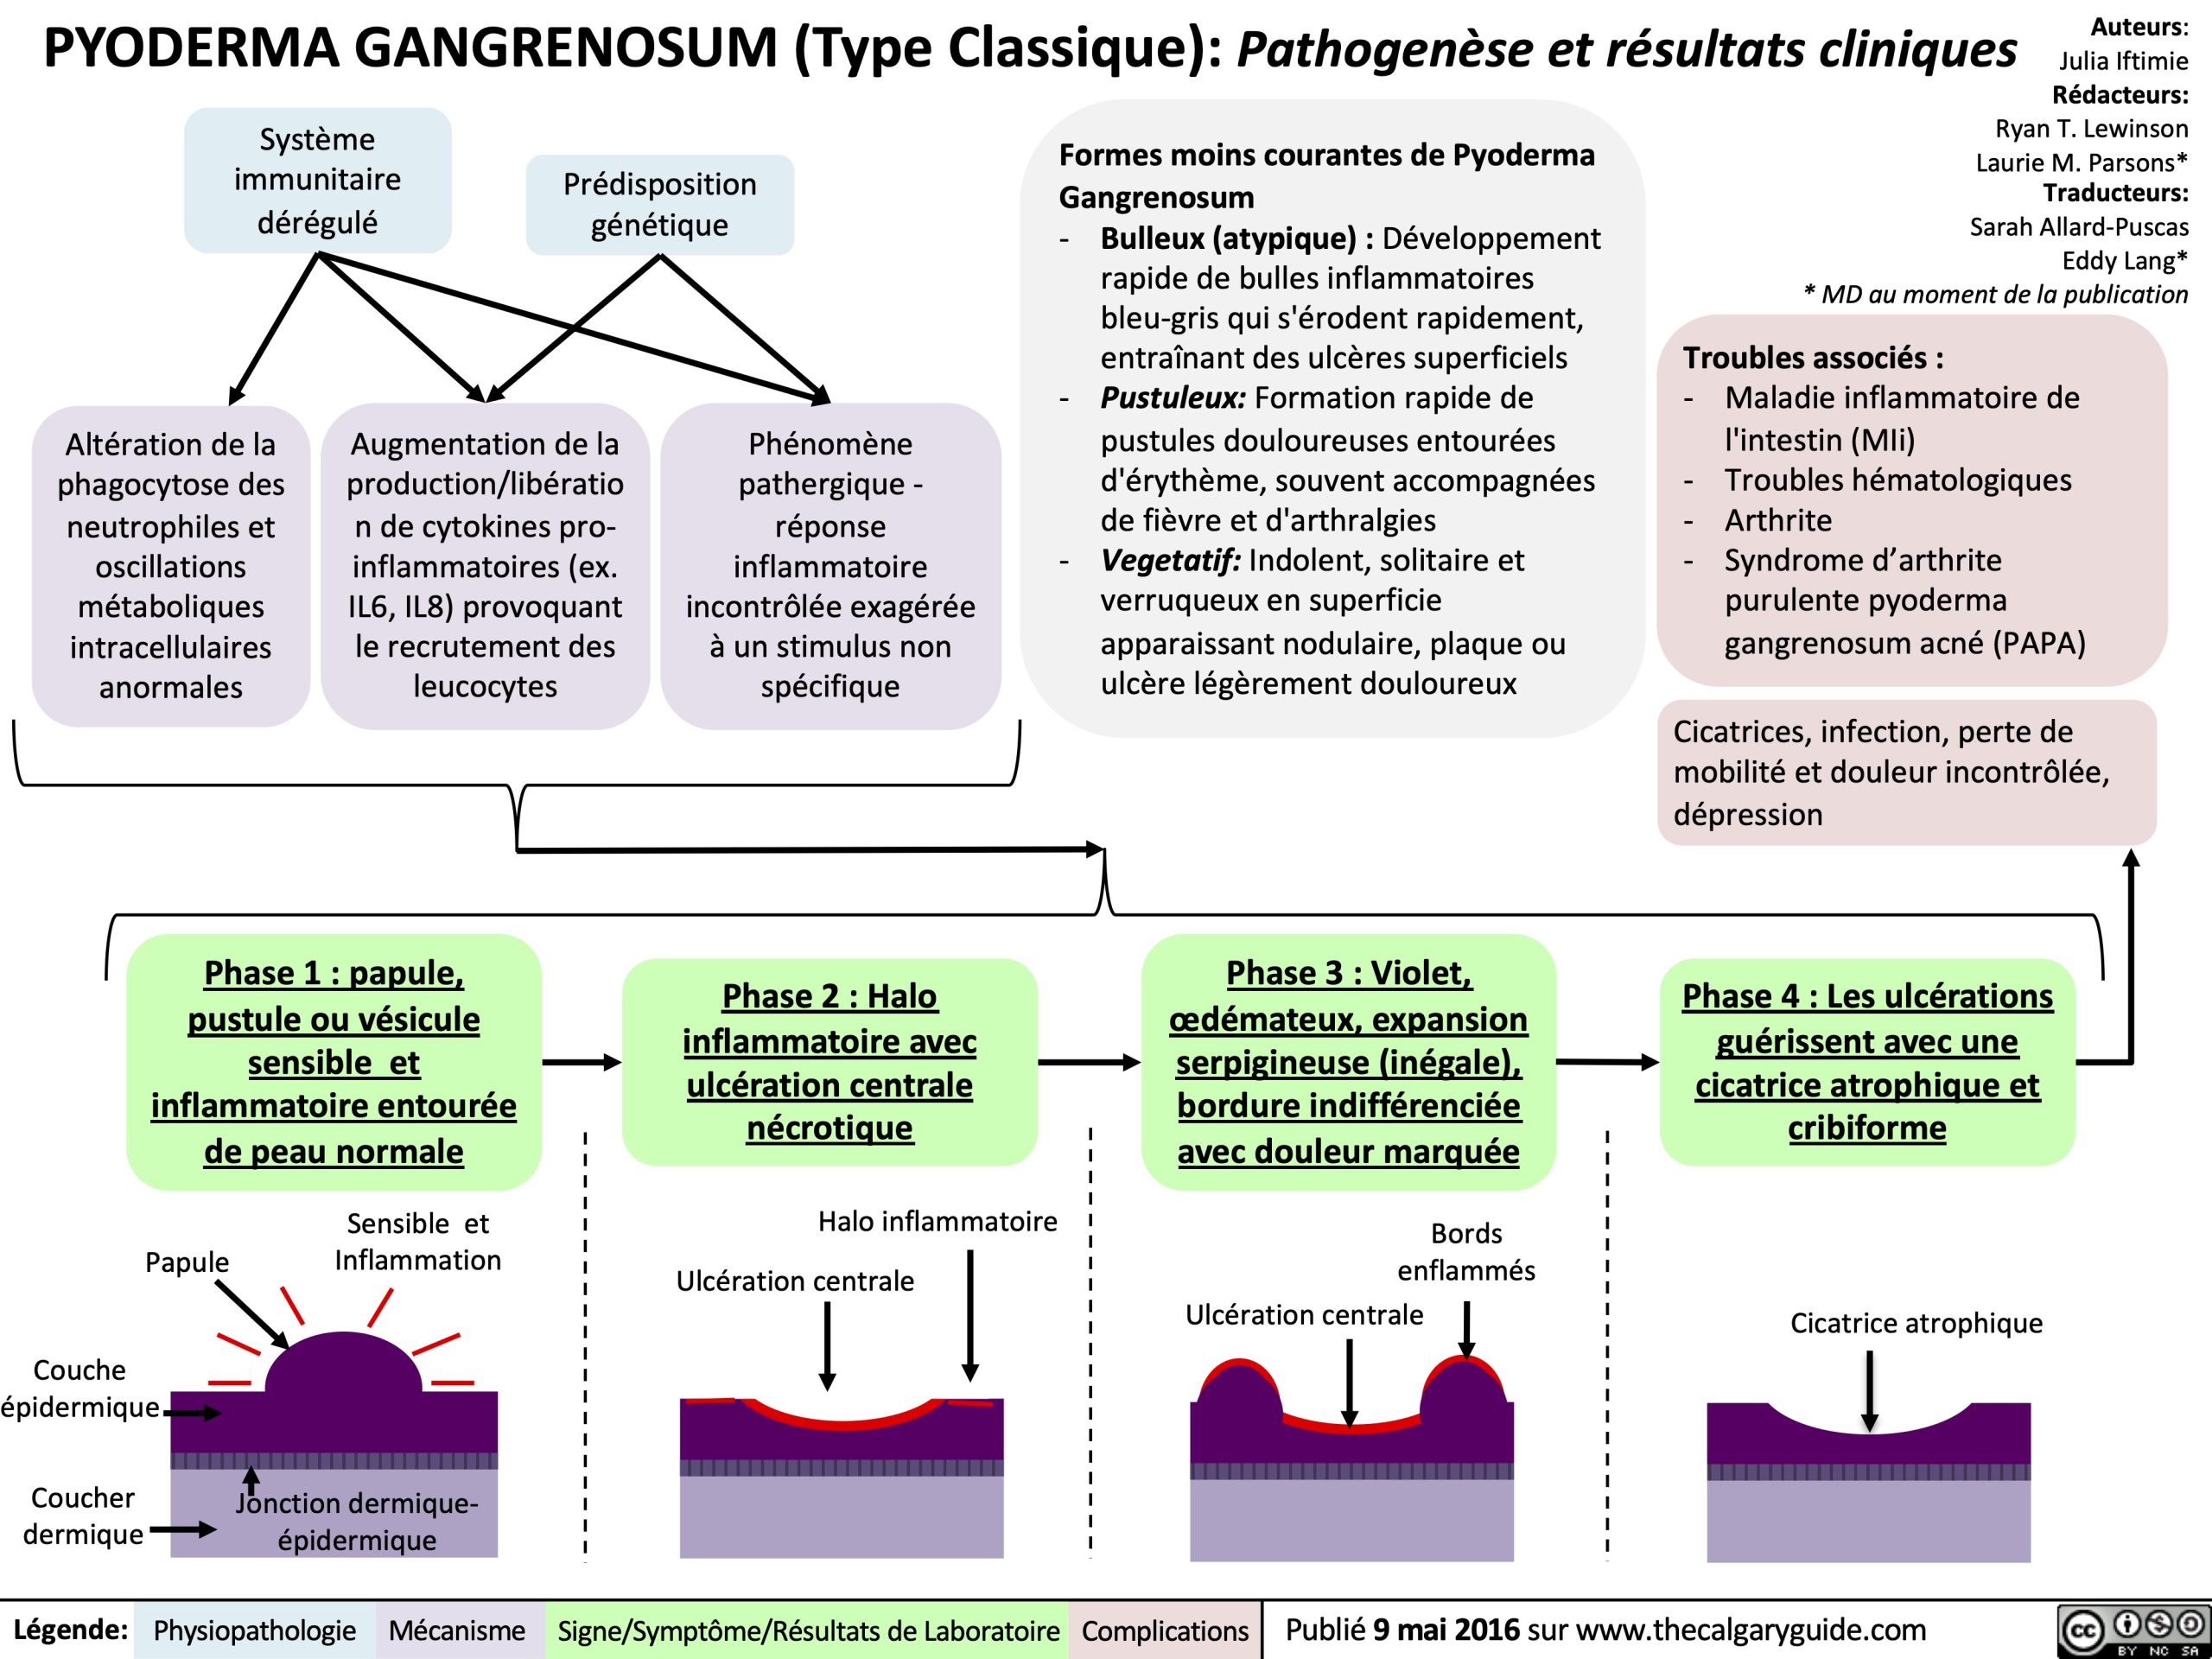 pyoderma-gangrenosum-type-classique-pathogenese-et-resultats-cliniques